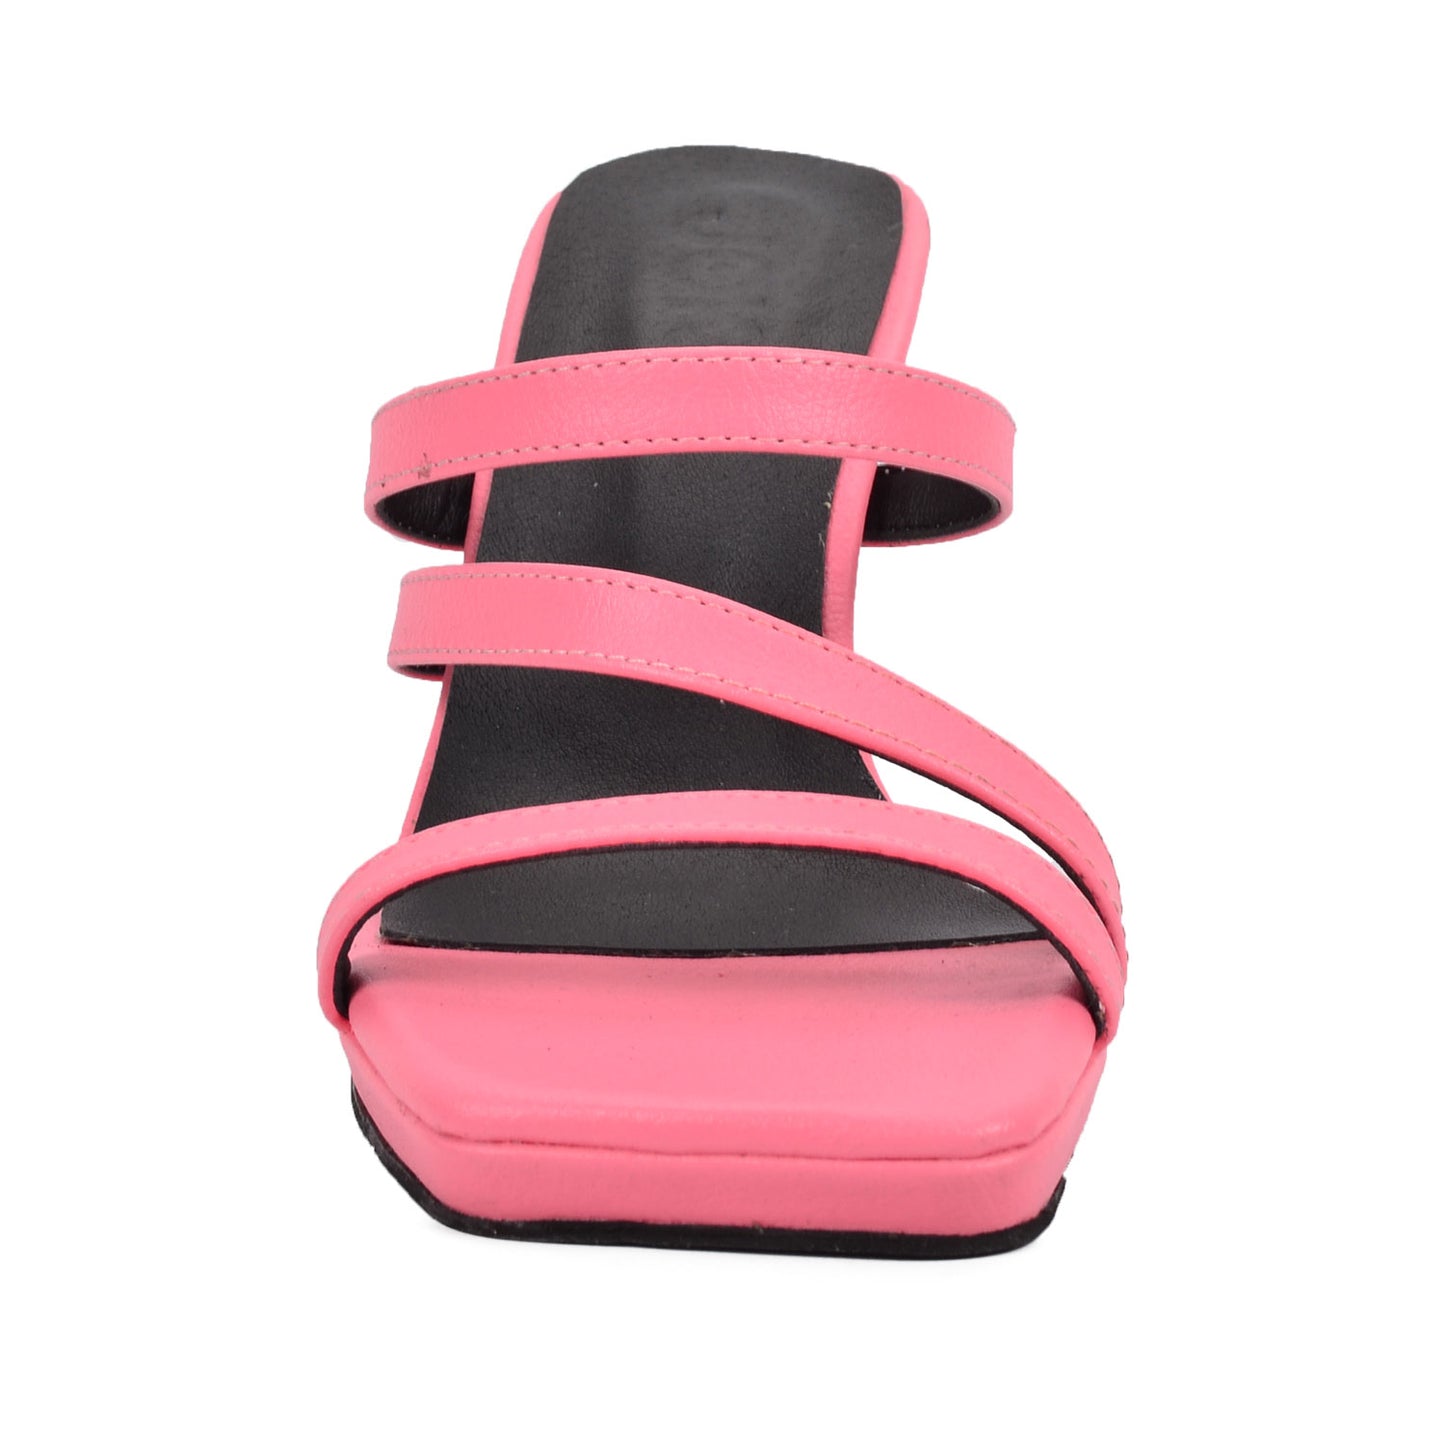 Irlanda Pink | Leather Strappy Sandals